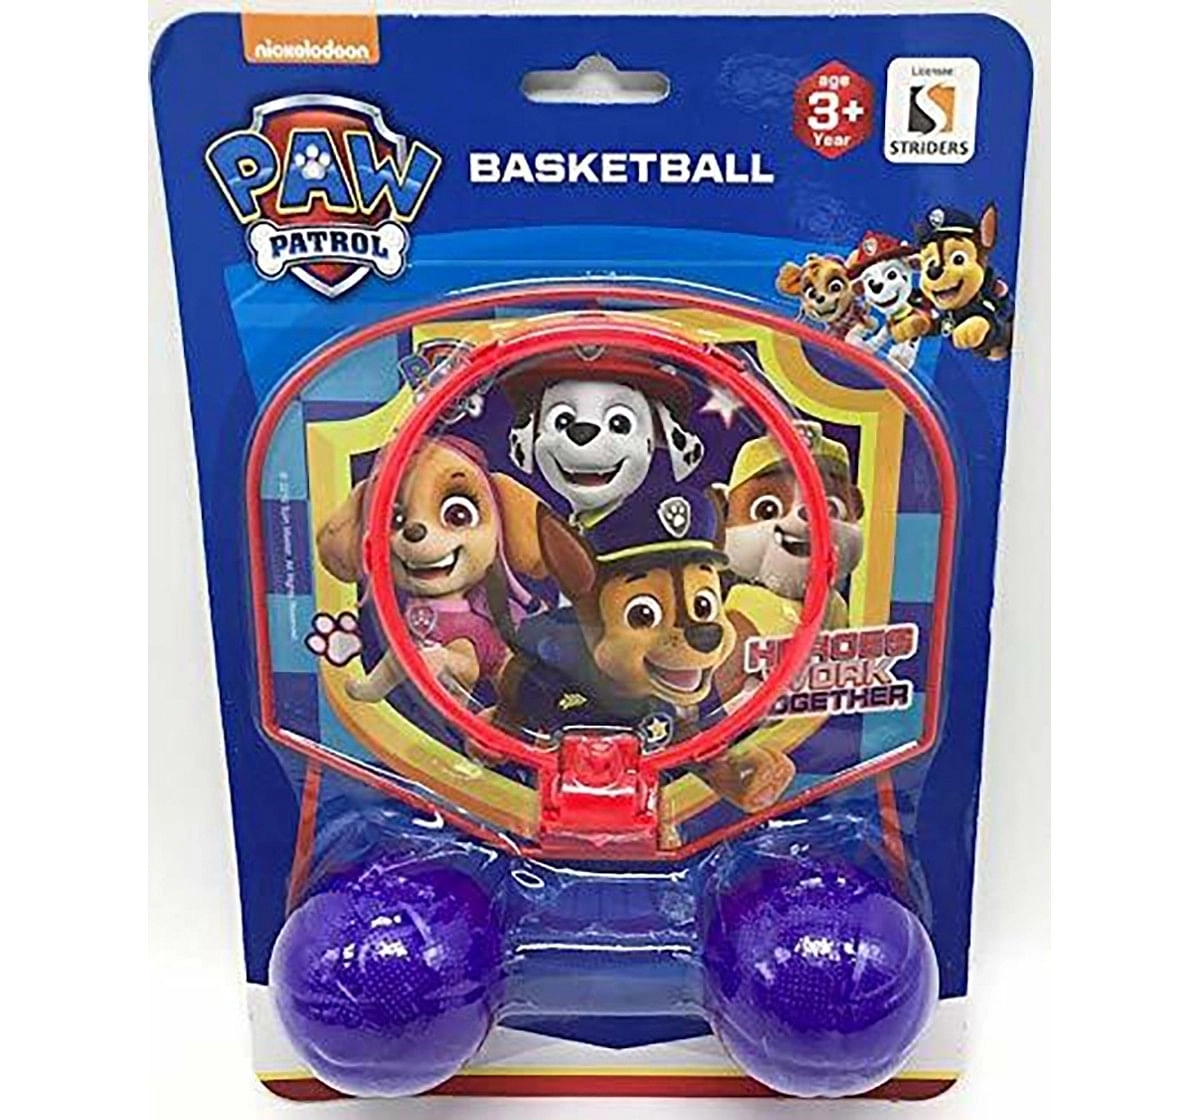 Paw Patrol Basket Ball Board for Kids age 3Y+ 